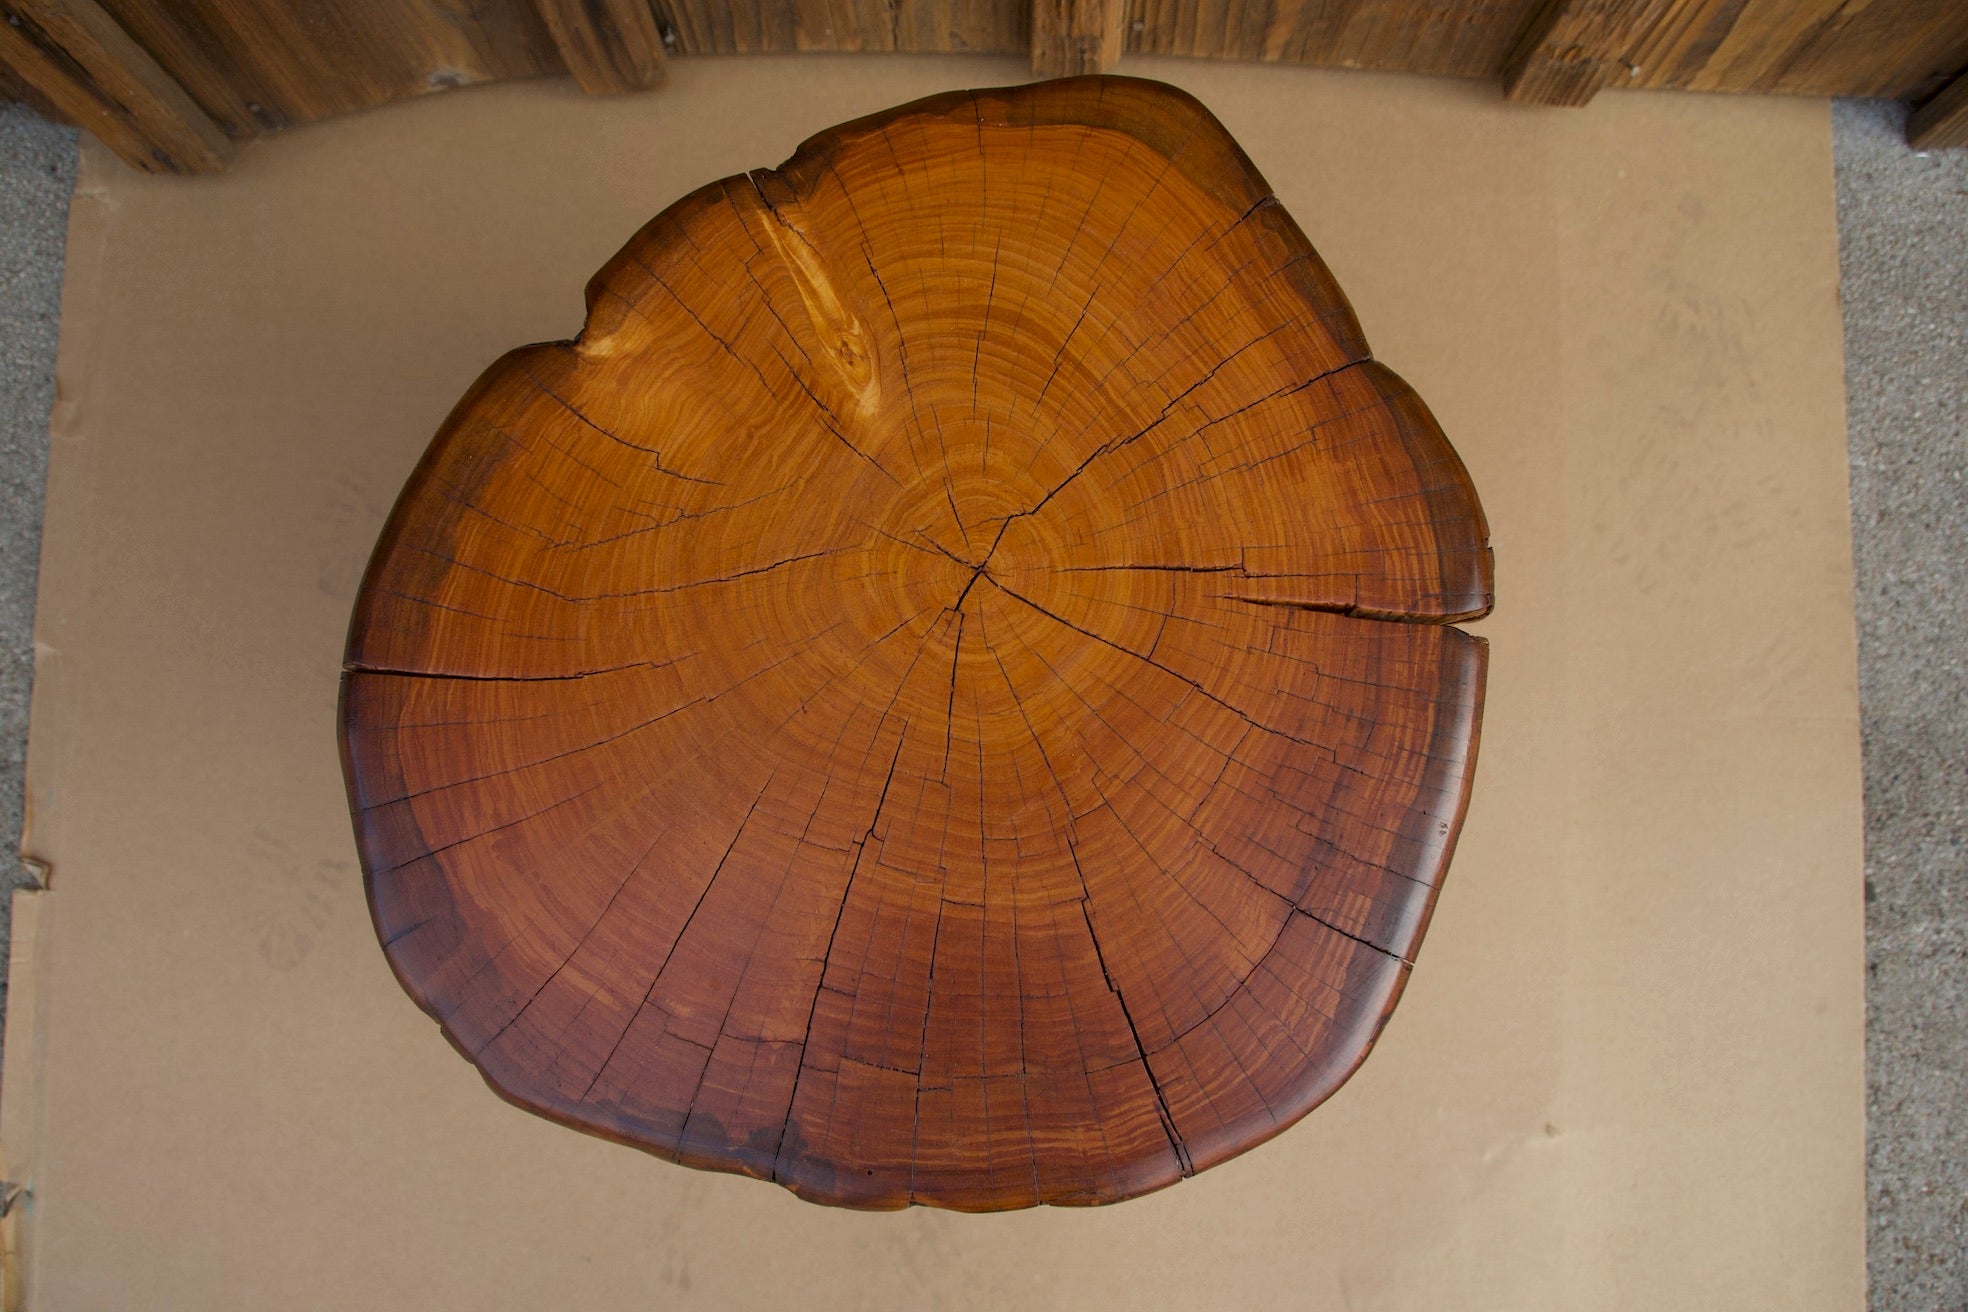 Monterey Cypress Wood Stool #143141